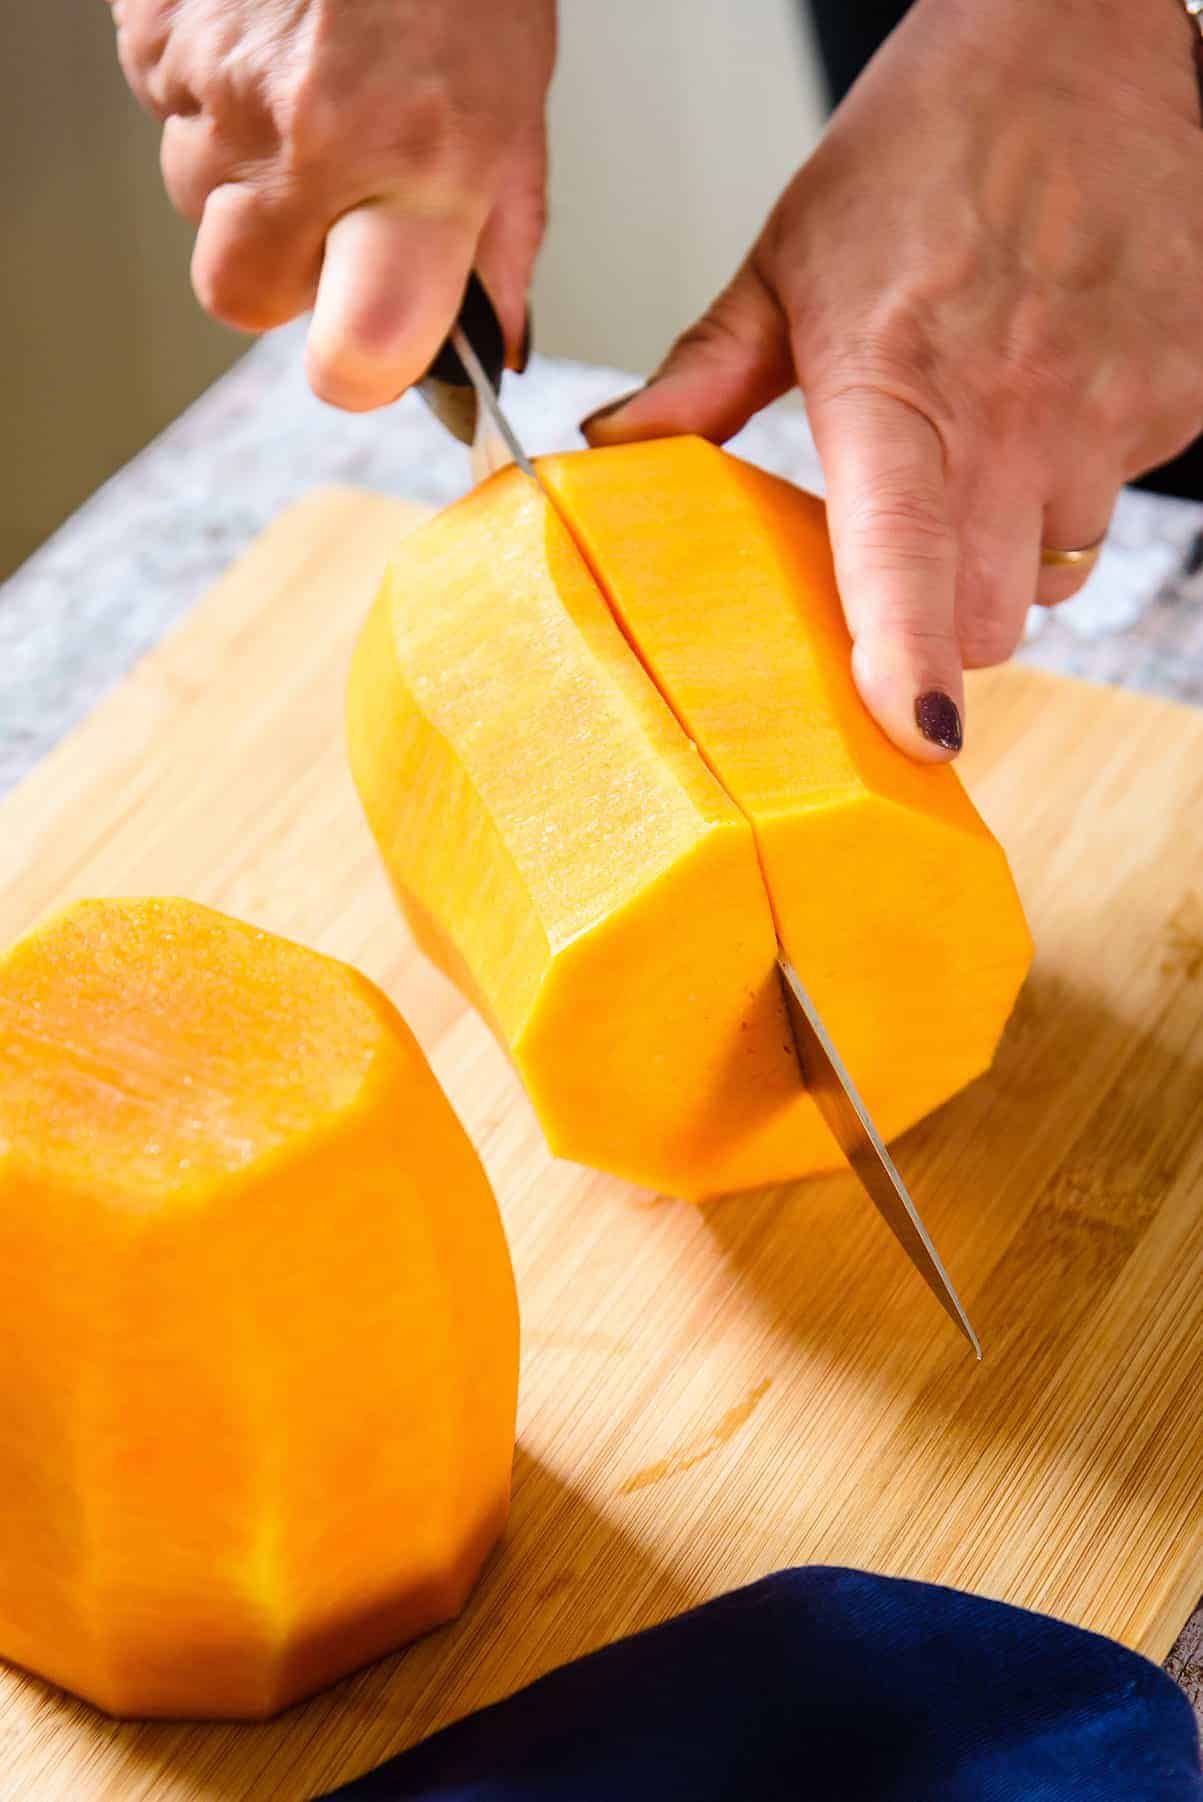 Cutting the peeled squash in half